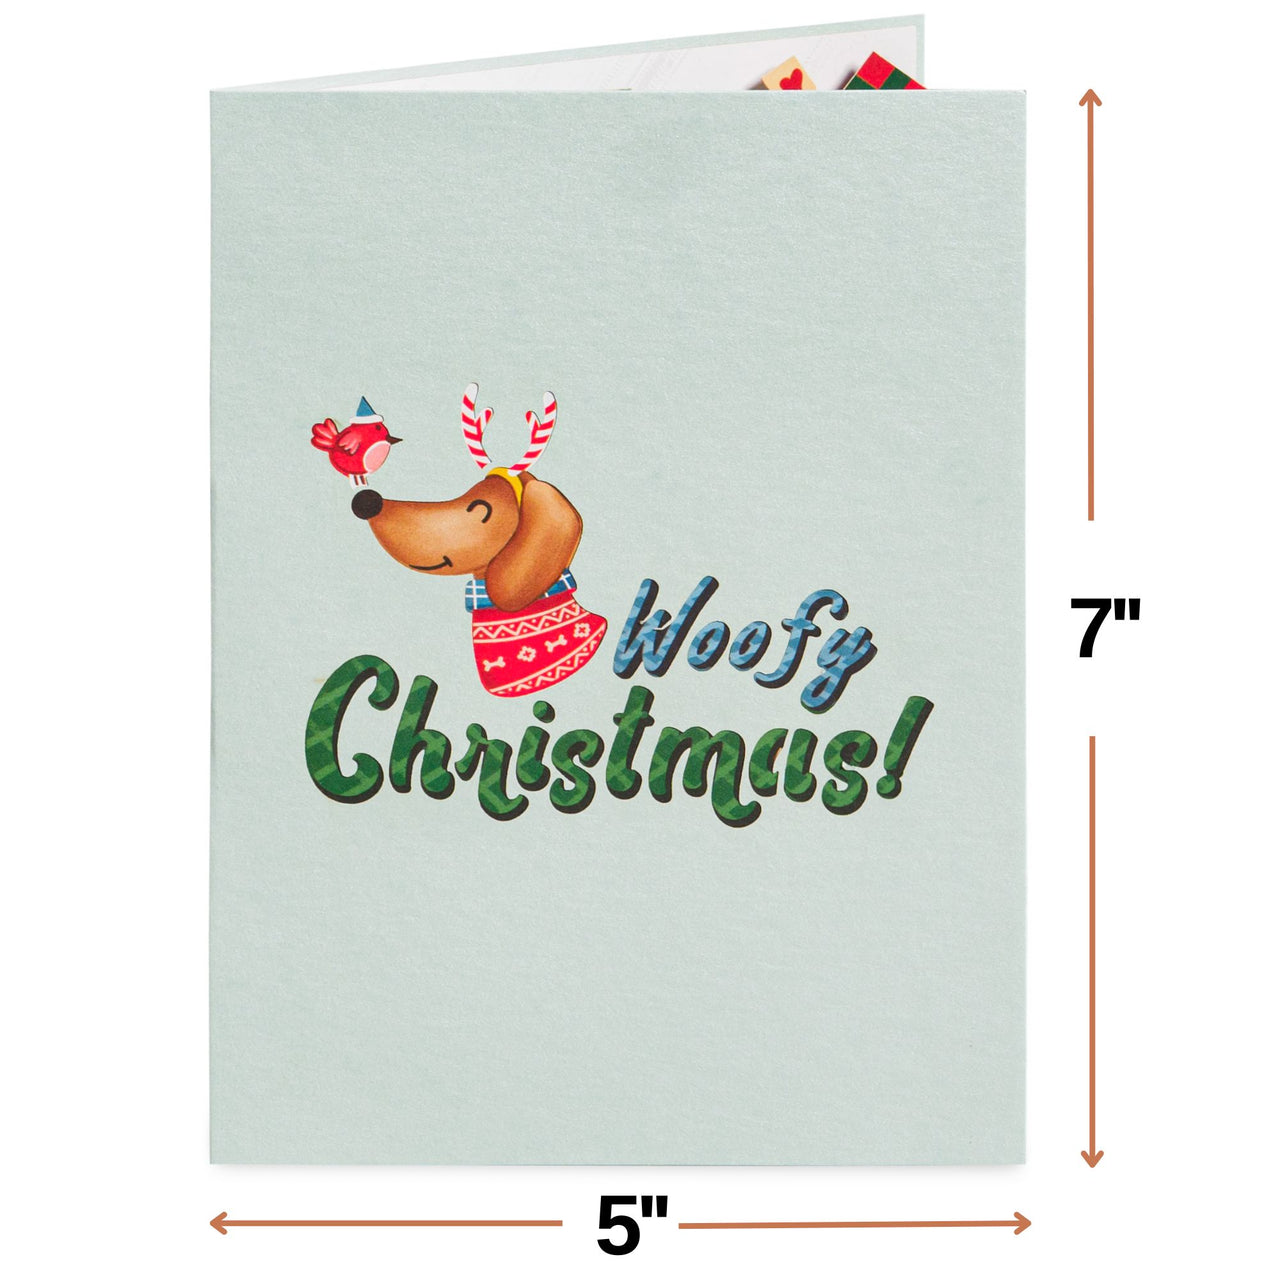 Woofy Christmas Pop Up Card, with Keepsake - 5"x7"